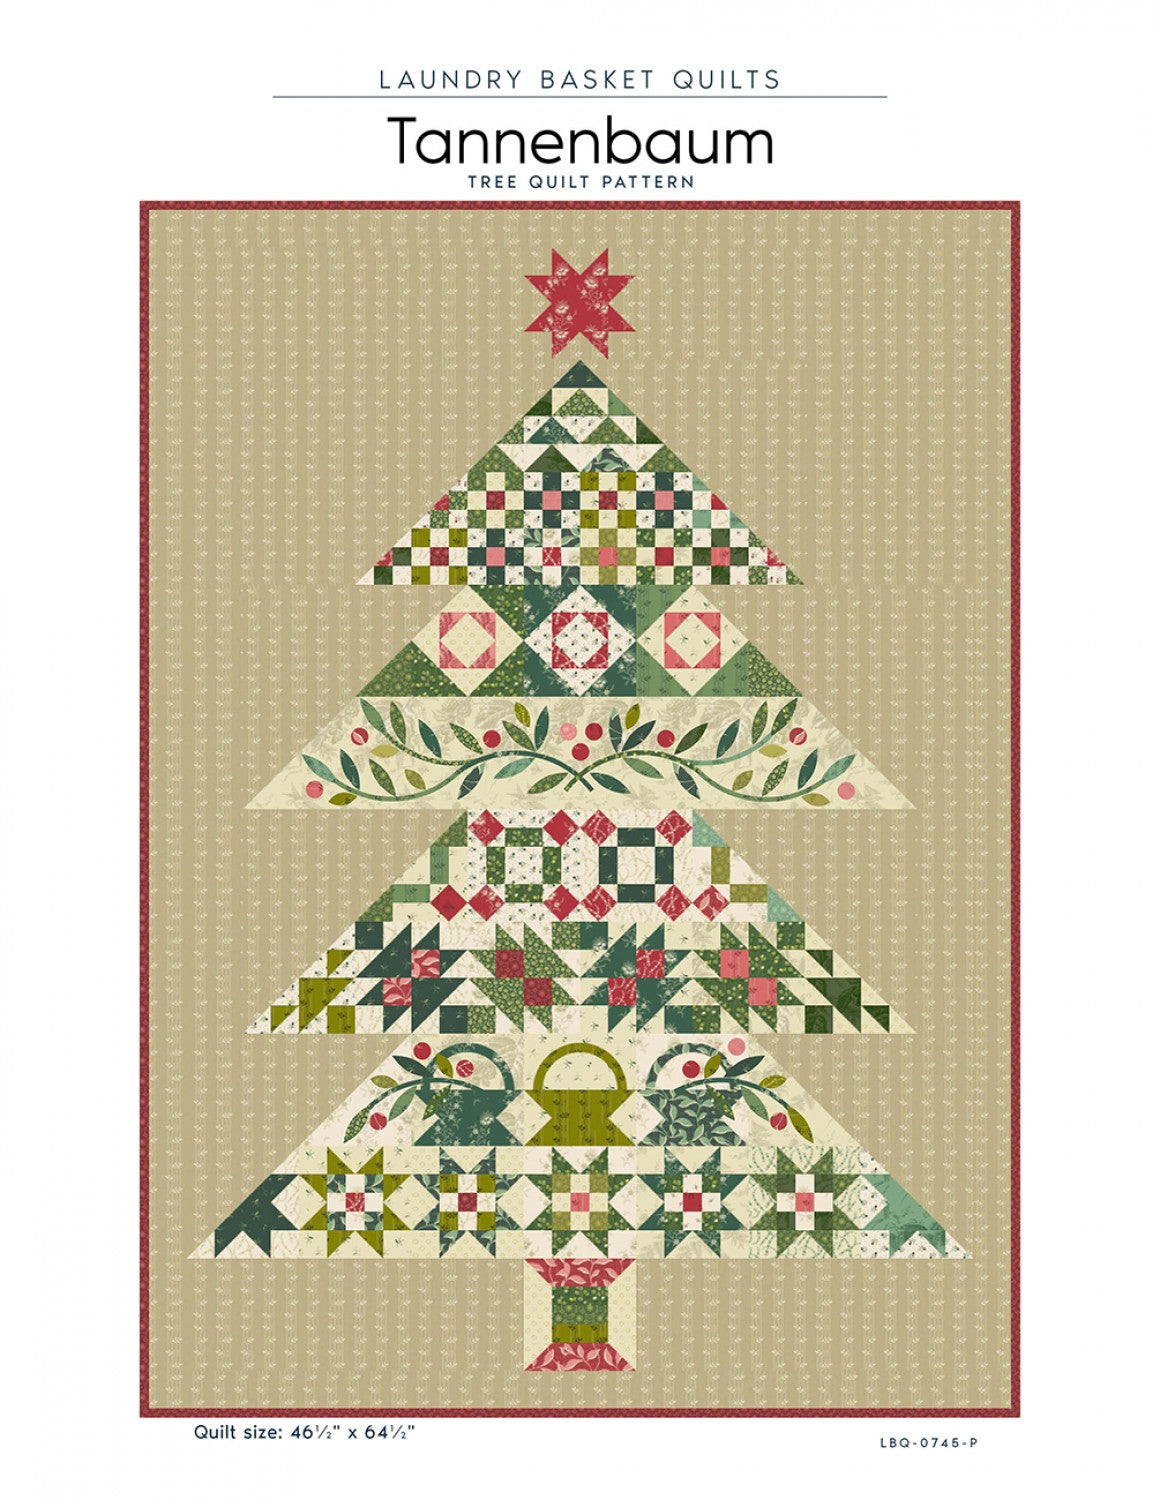 Tannenbaum (Christmas Tree)